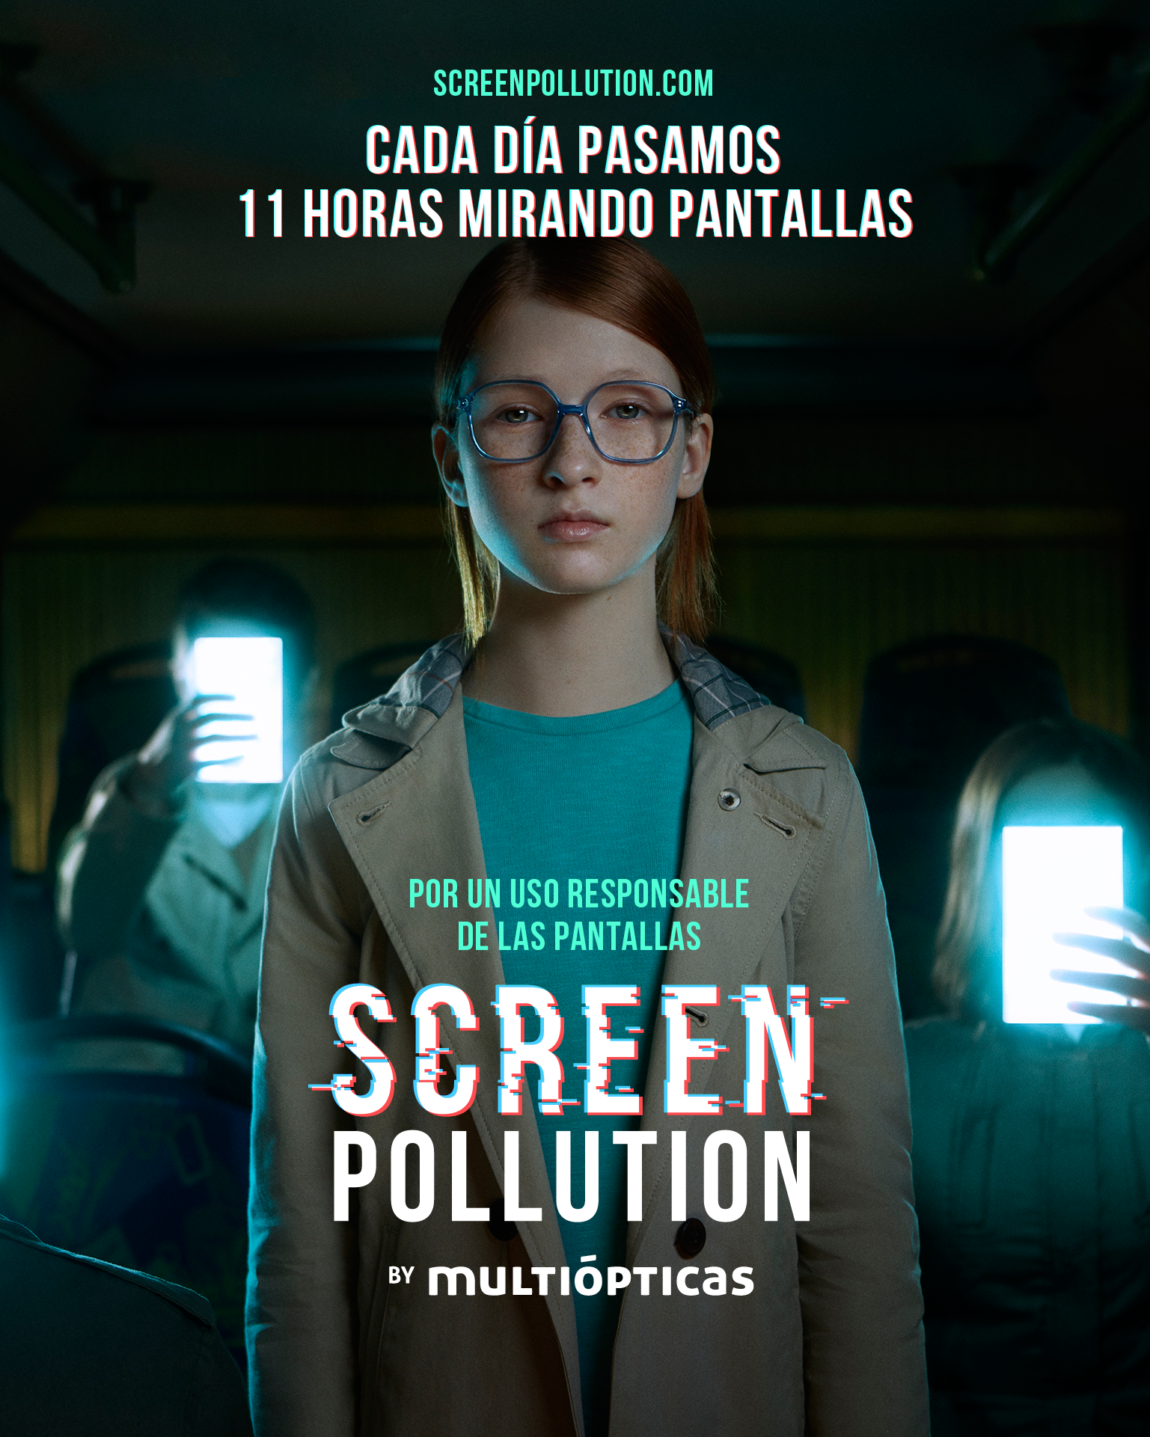 screen pollution